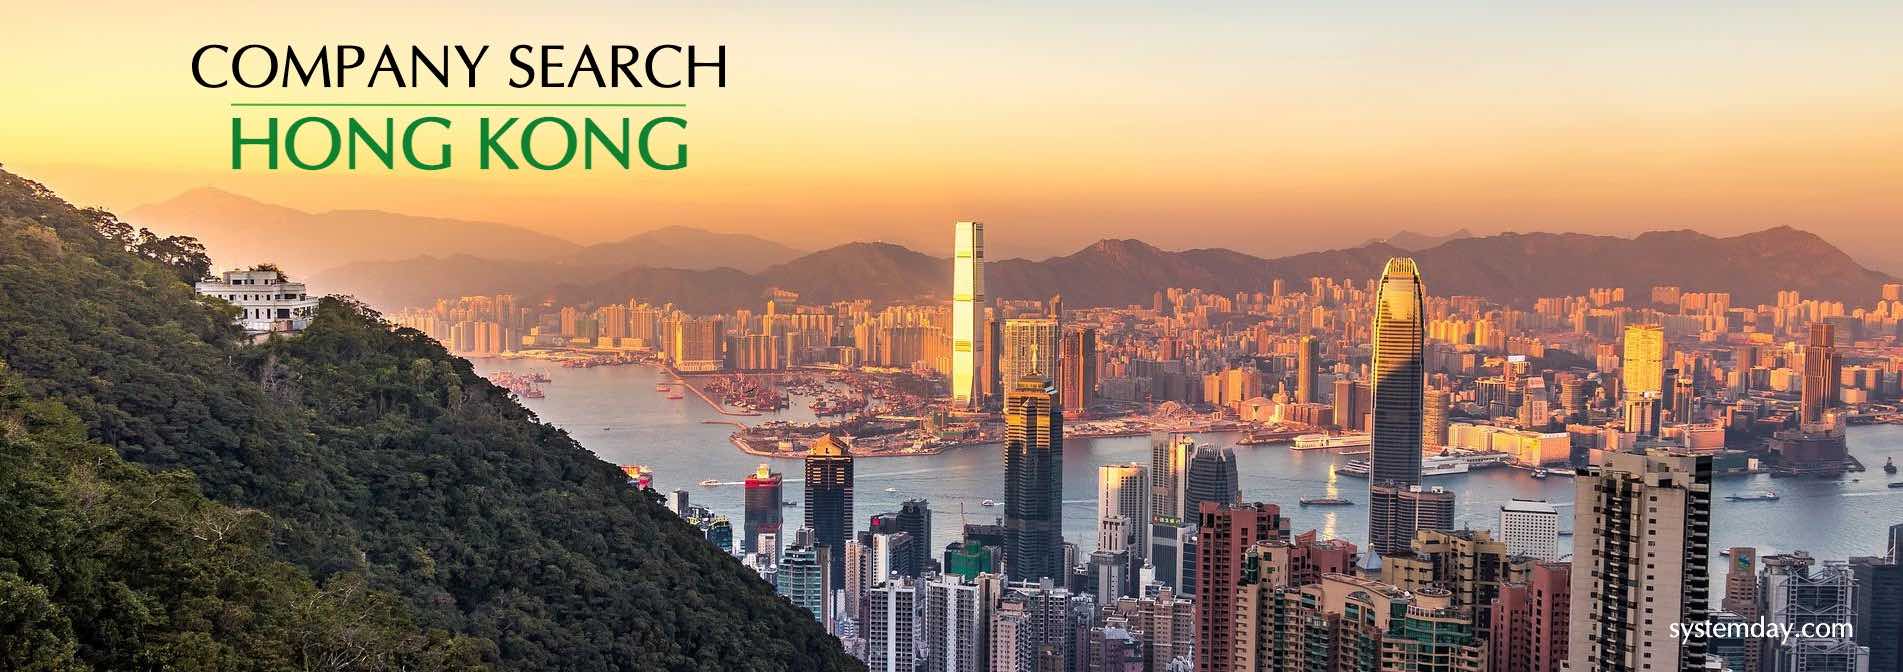 Hong Kong Company Search